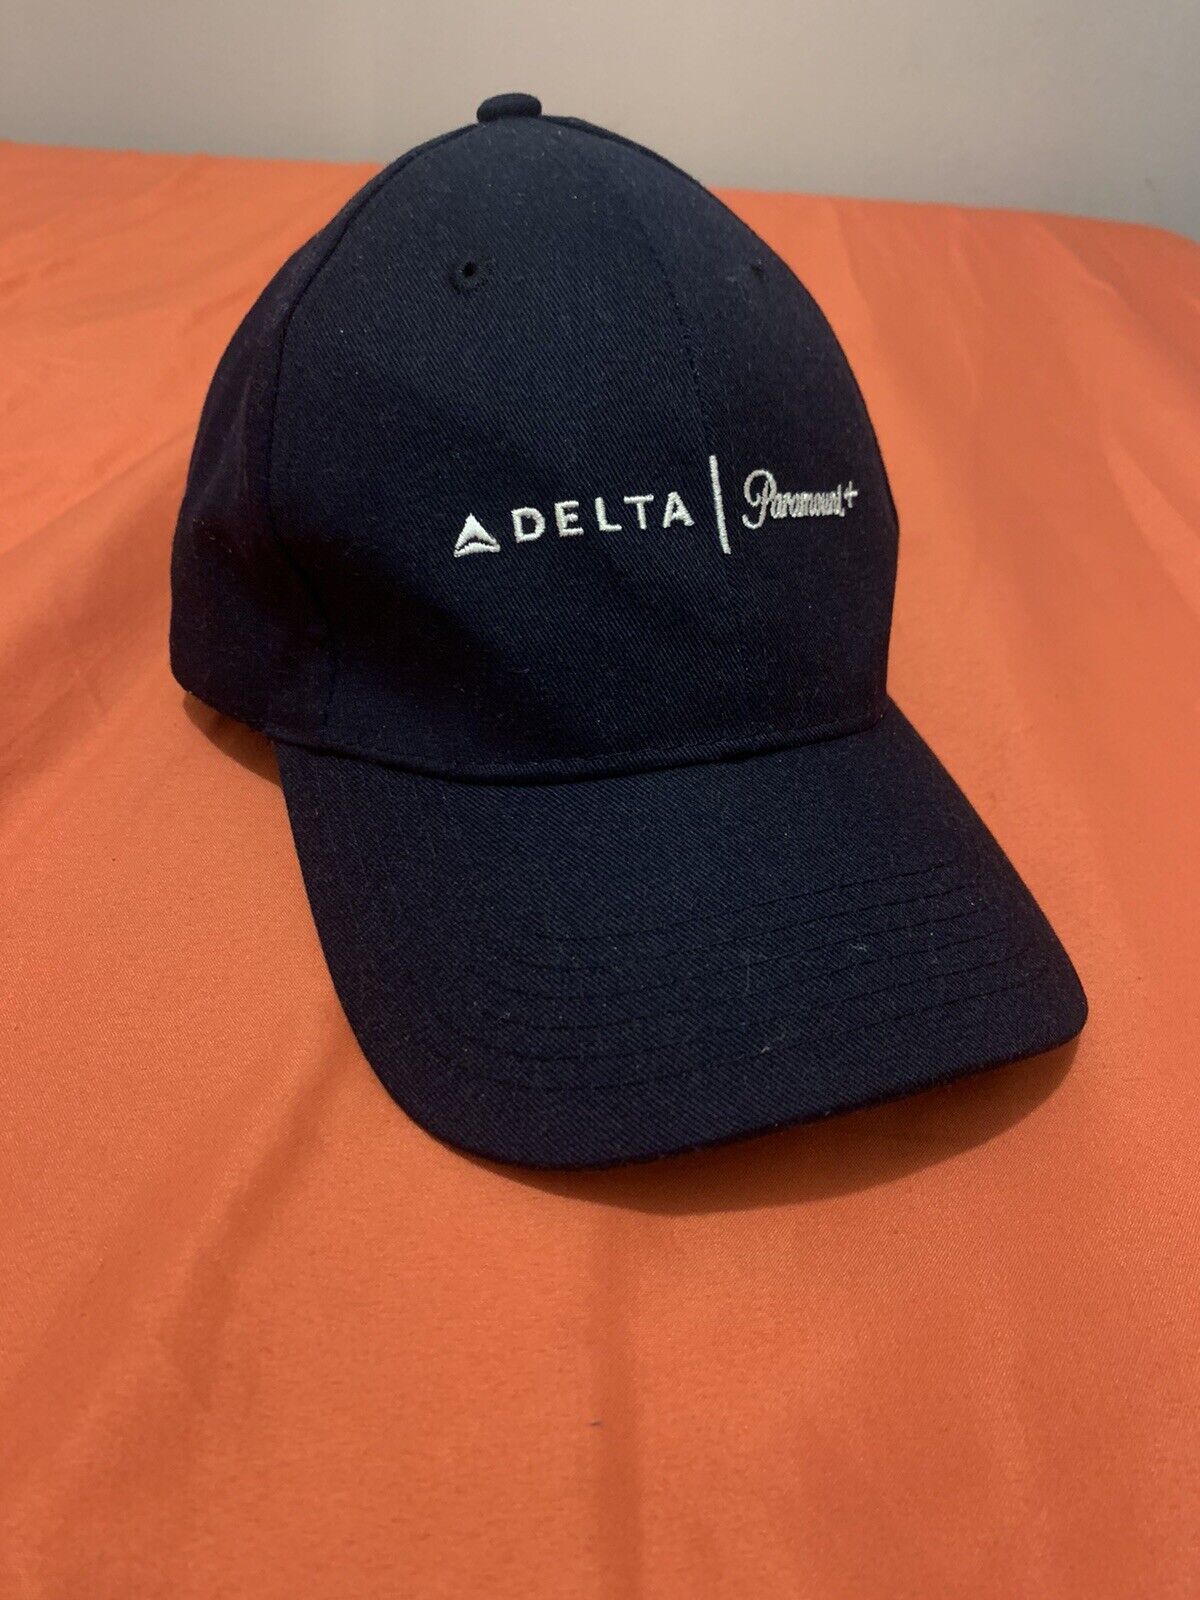 Delta Airlines / Paramount Plus Adjustable OSFM Navy Baseball Cap Hat